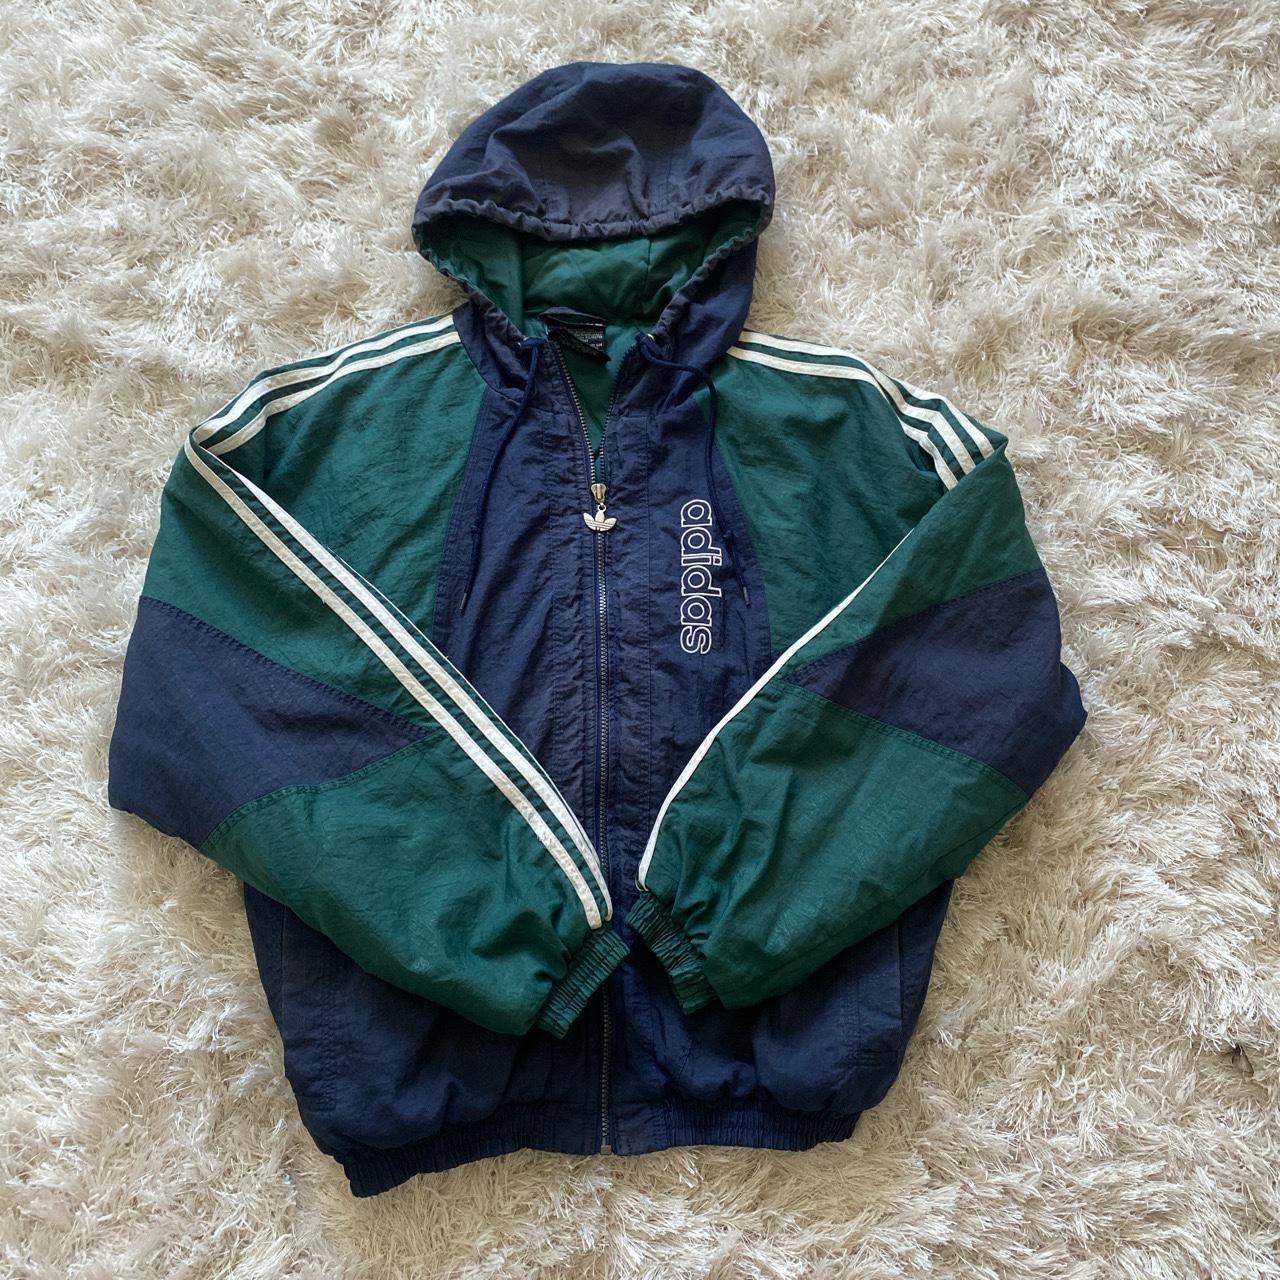 Vintage 90s Adidas puffer jacket size M No major... - Depop